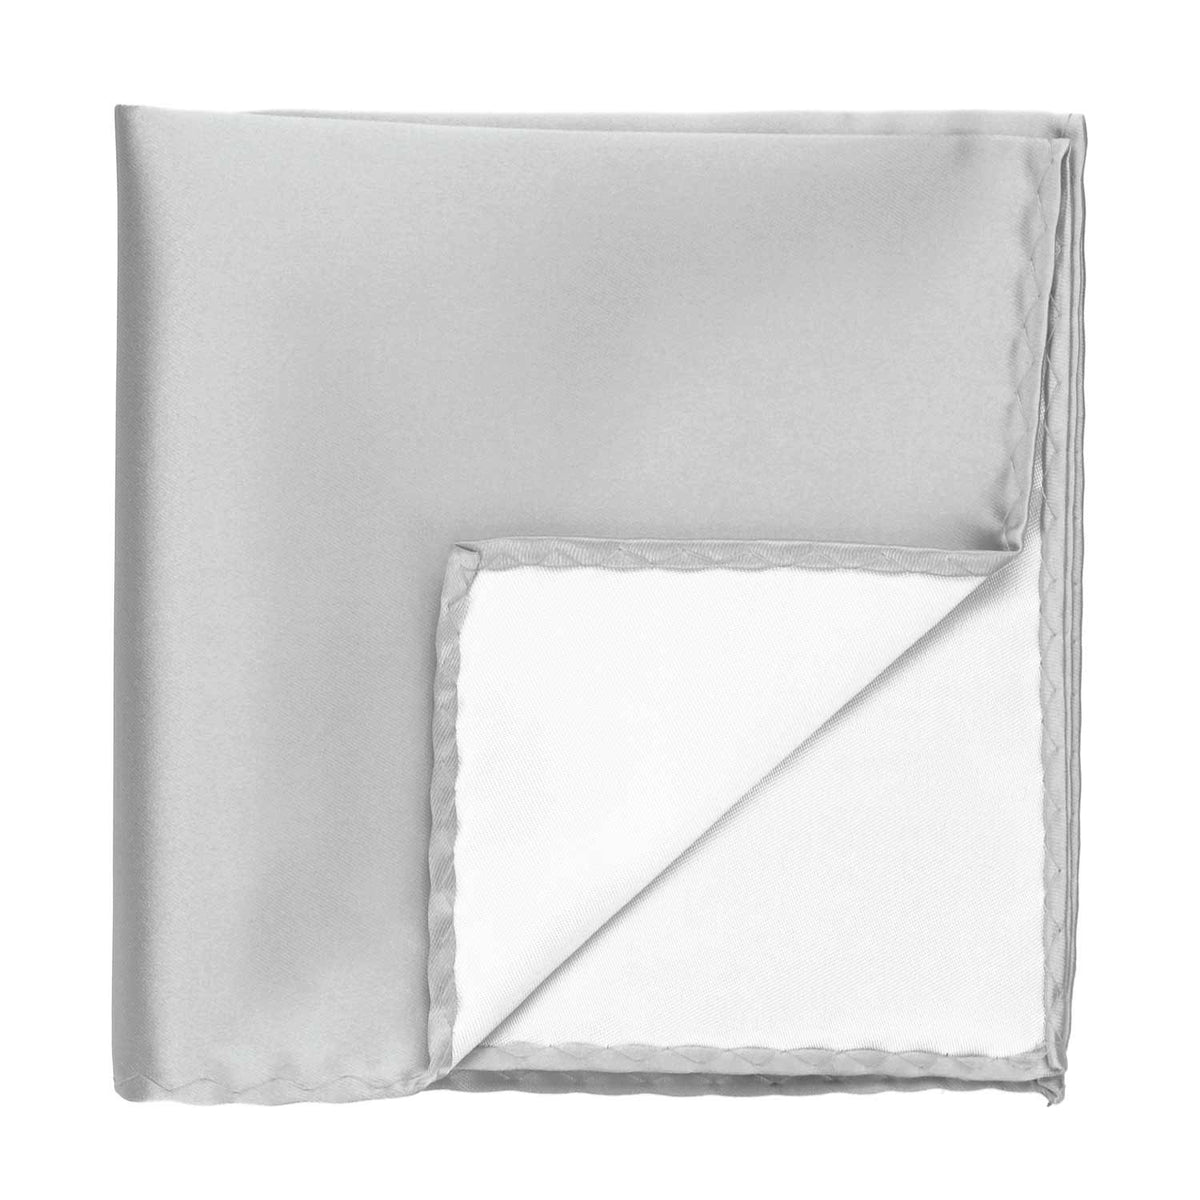 Light Silver Premium Pocket Square | Shop at TieMart – TieMart, Inc.